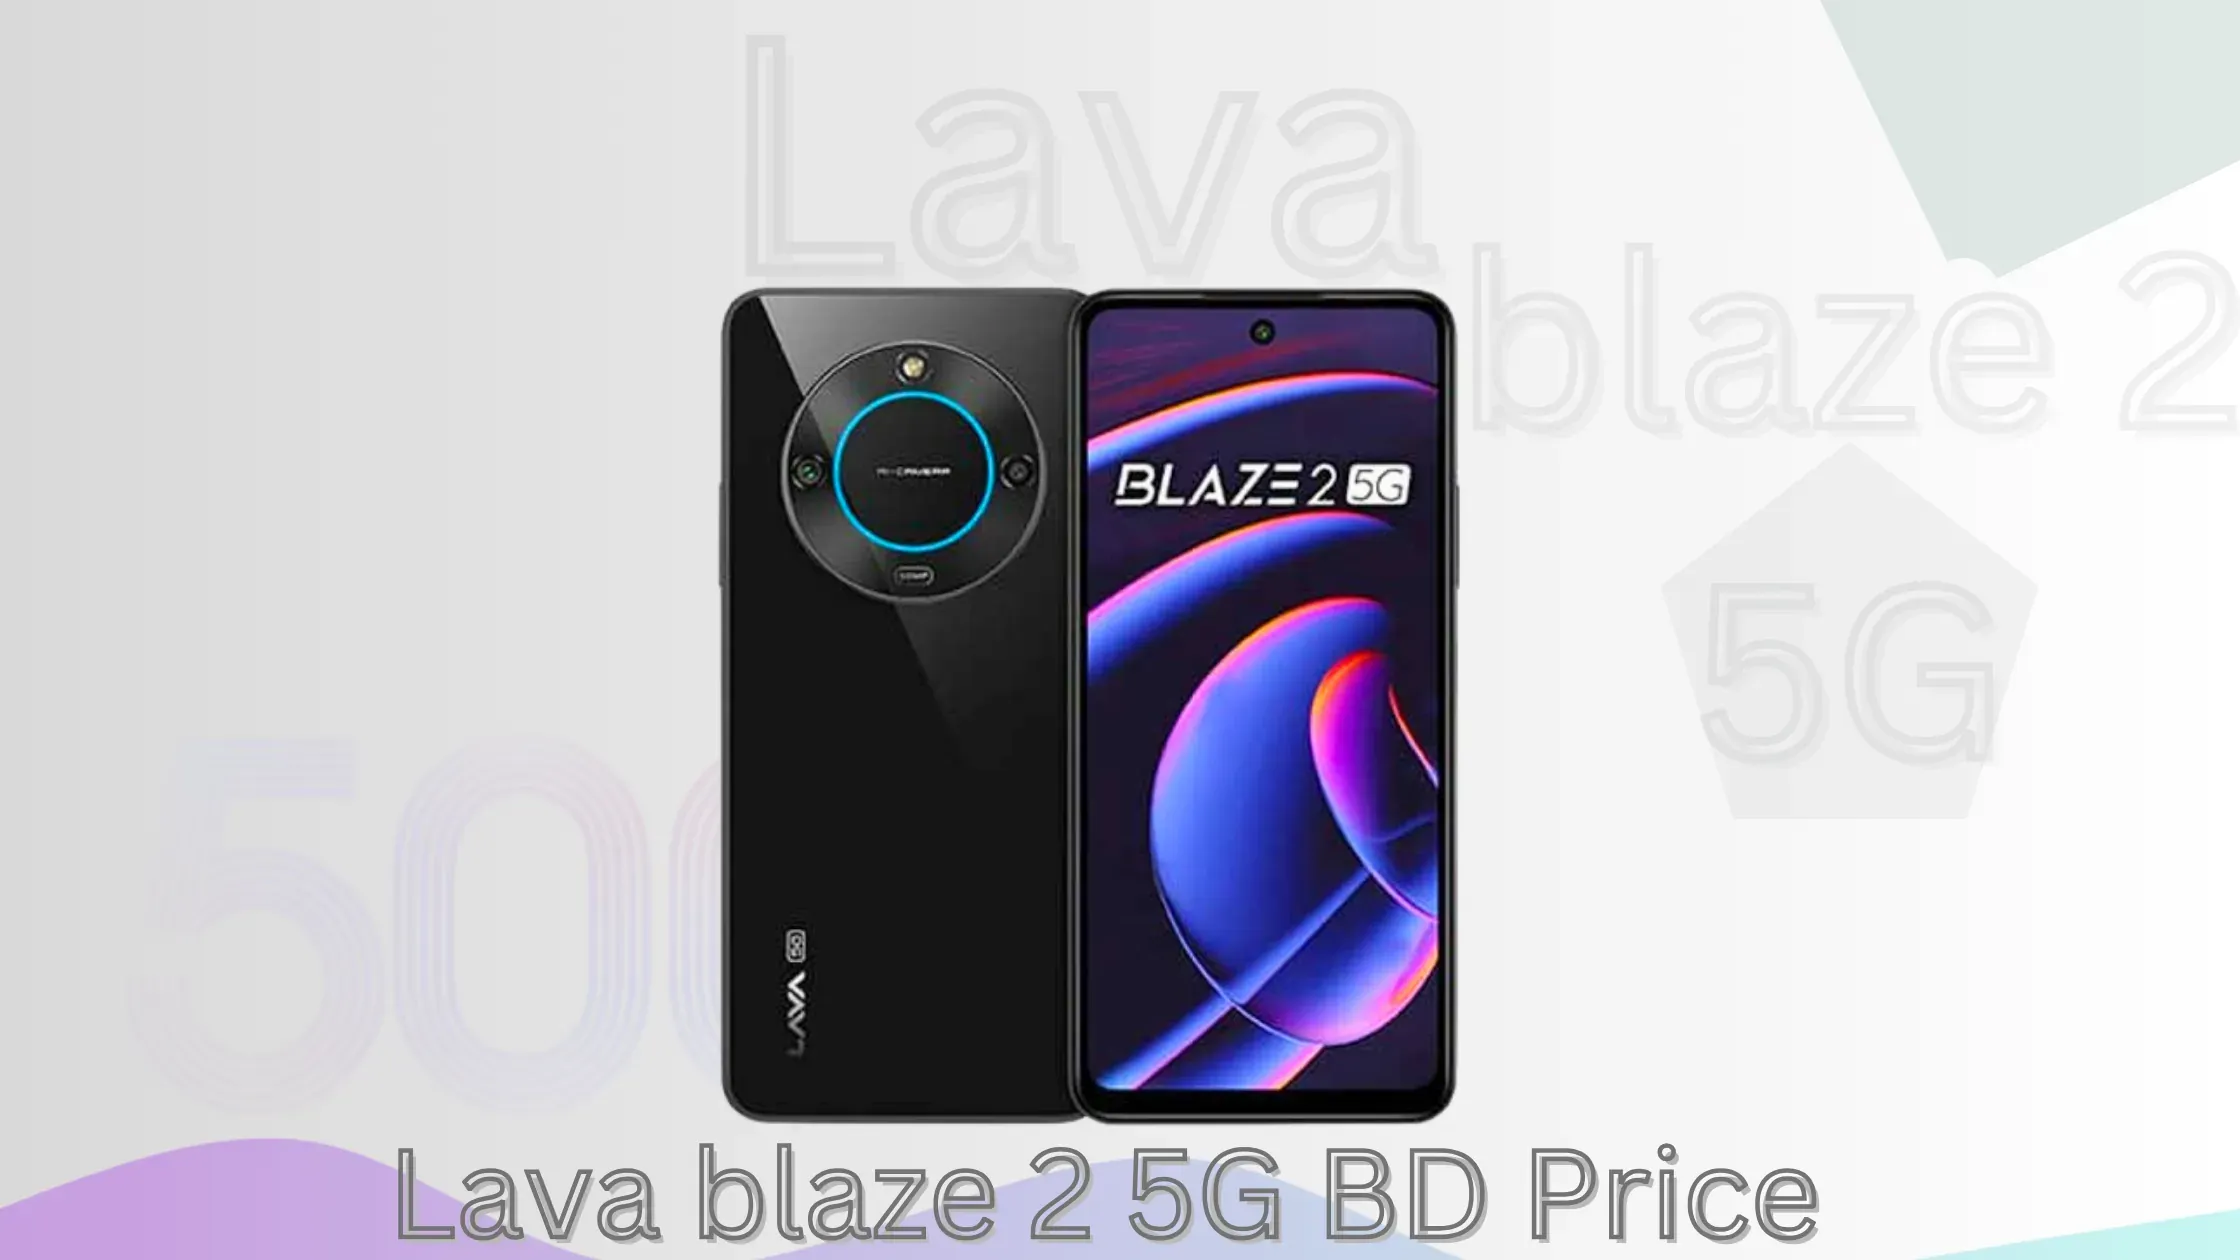 Lava Blaze 2 5G BD Price